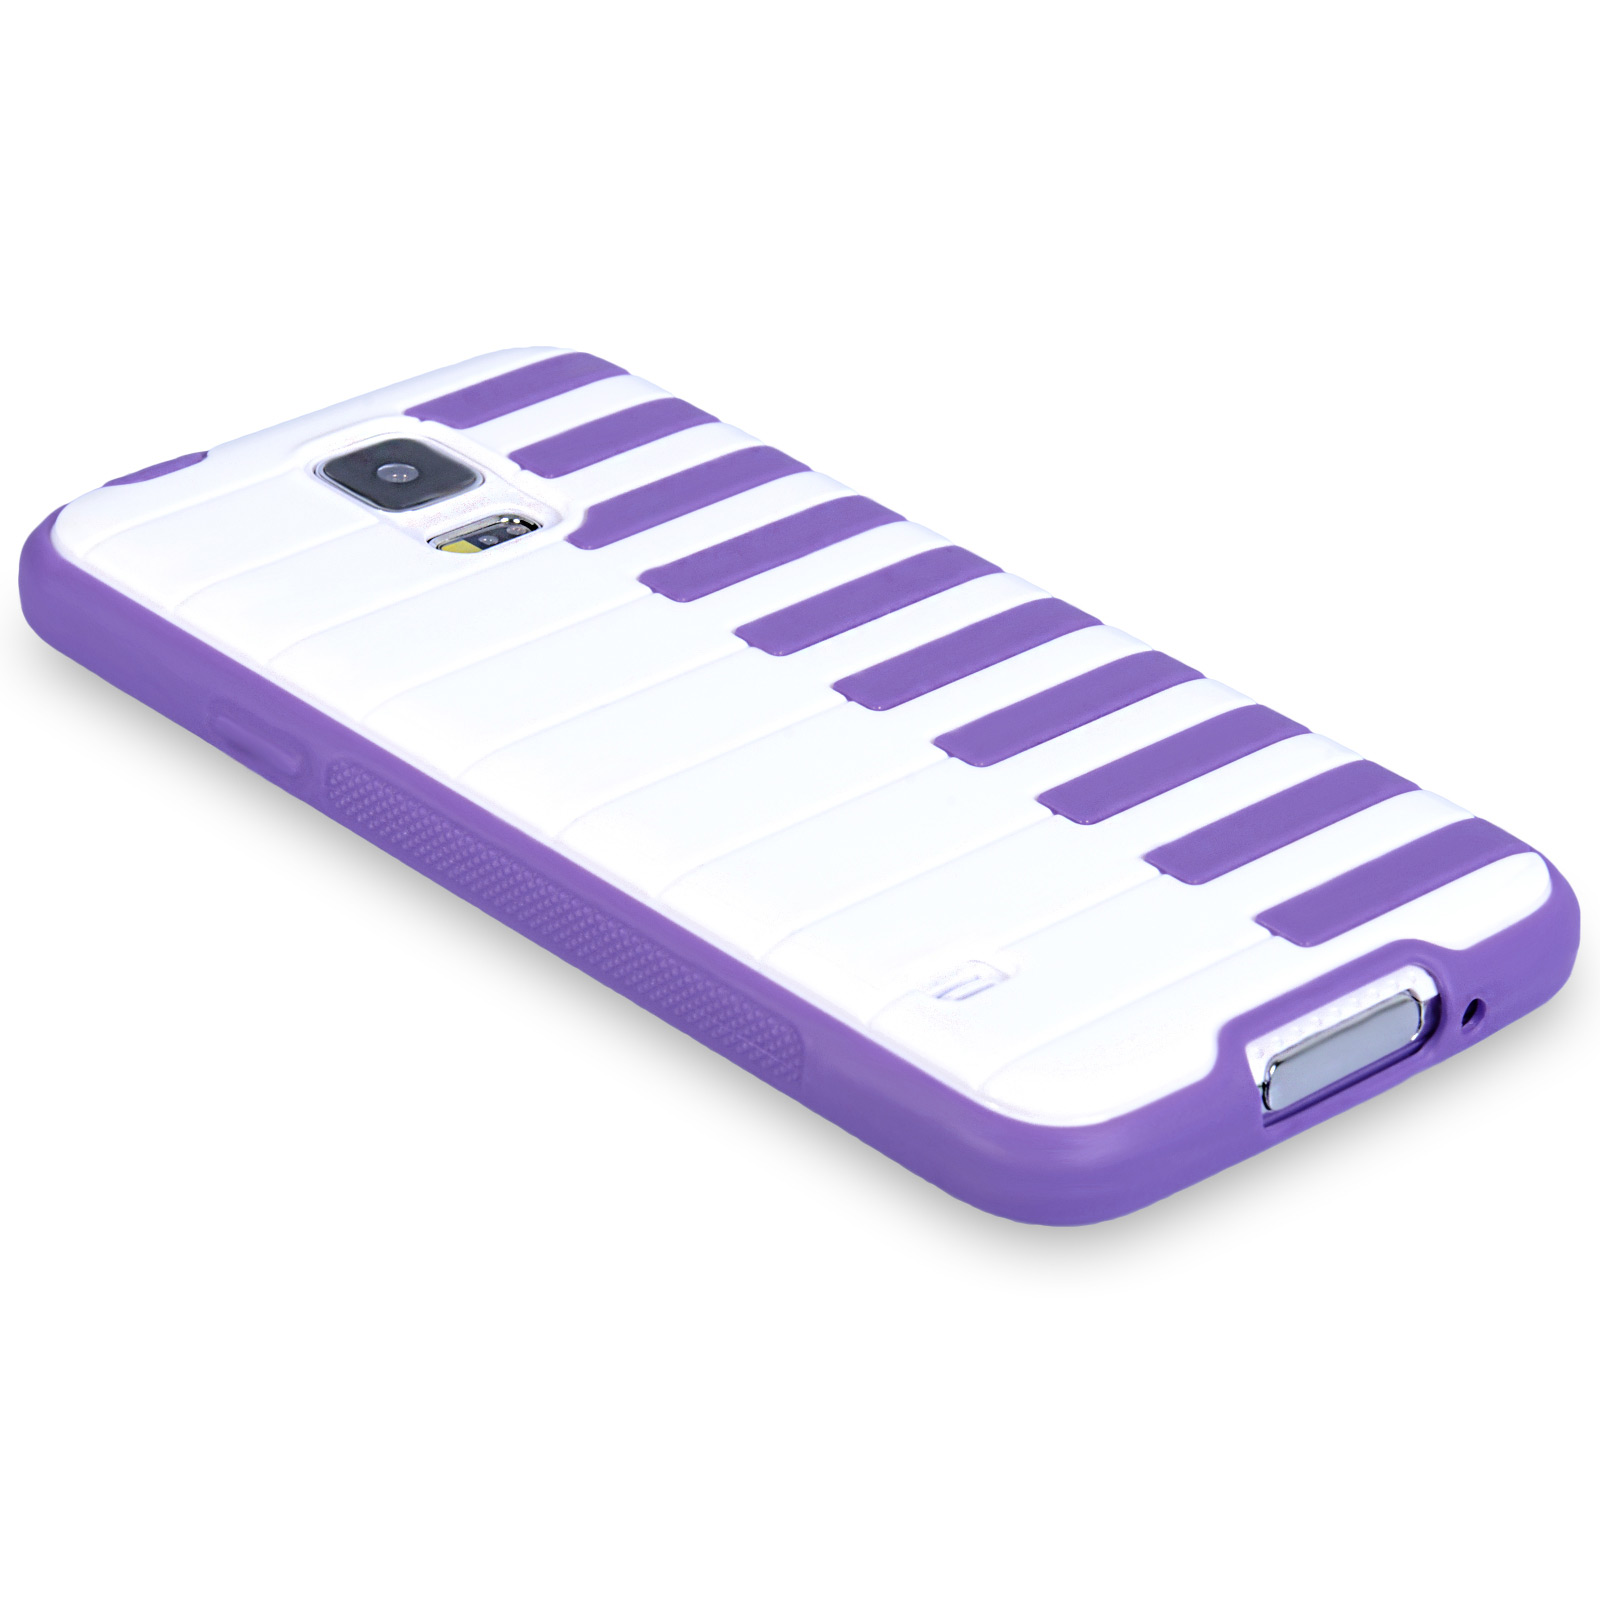 YouSave Accessories Samsung Galaxy S5 Piano Gel Case - Purple